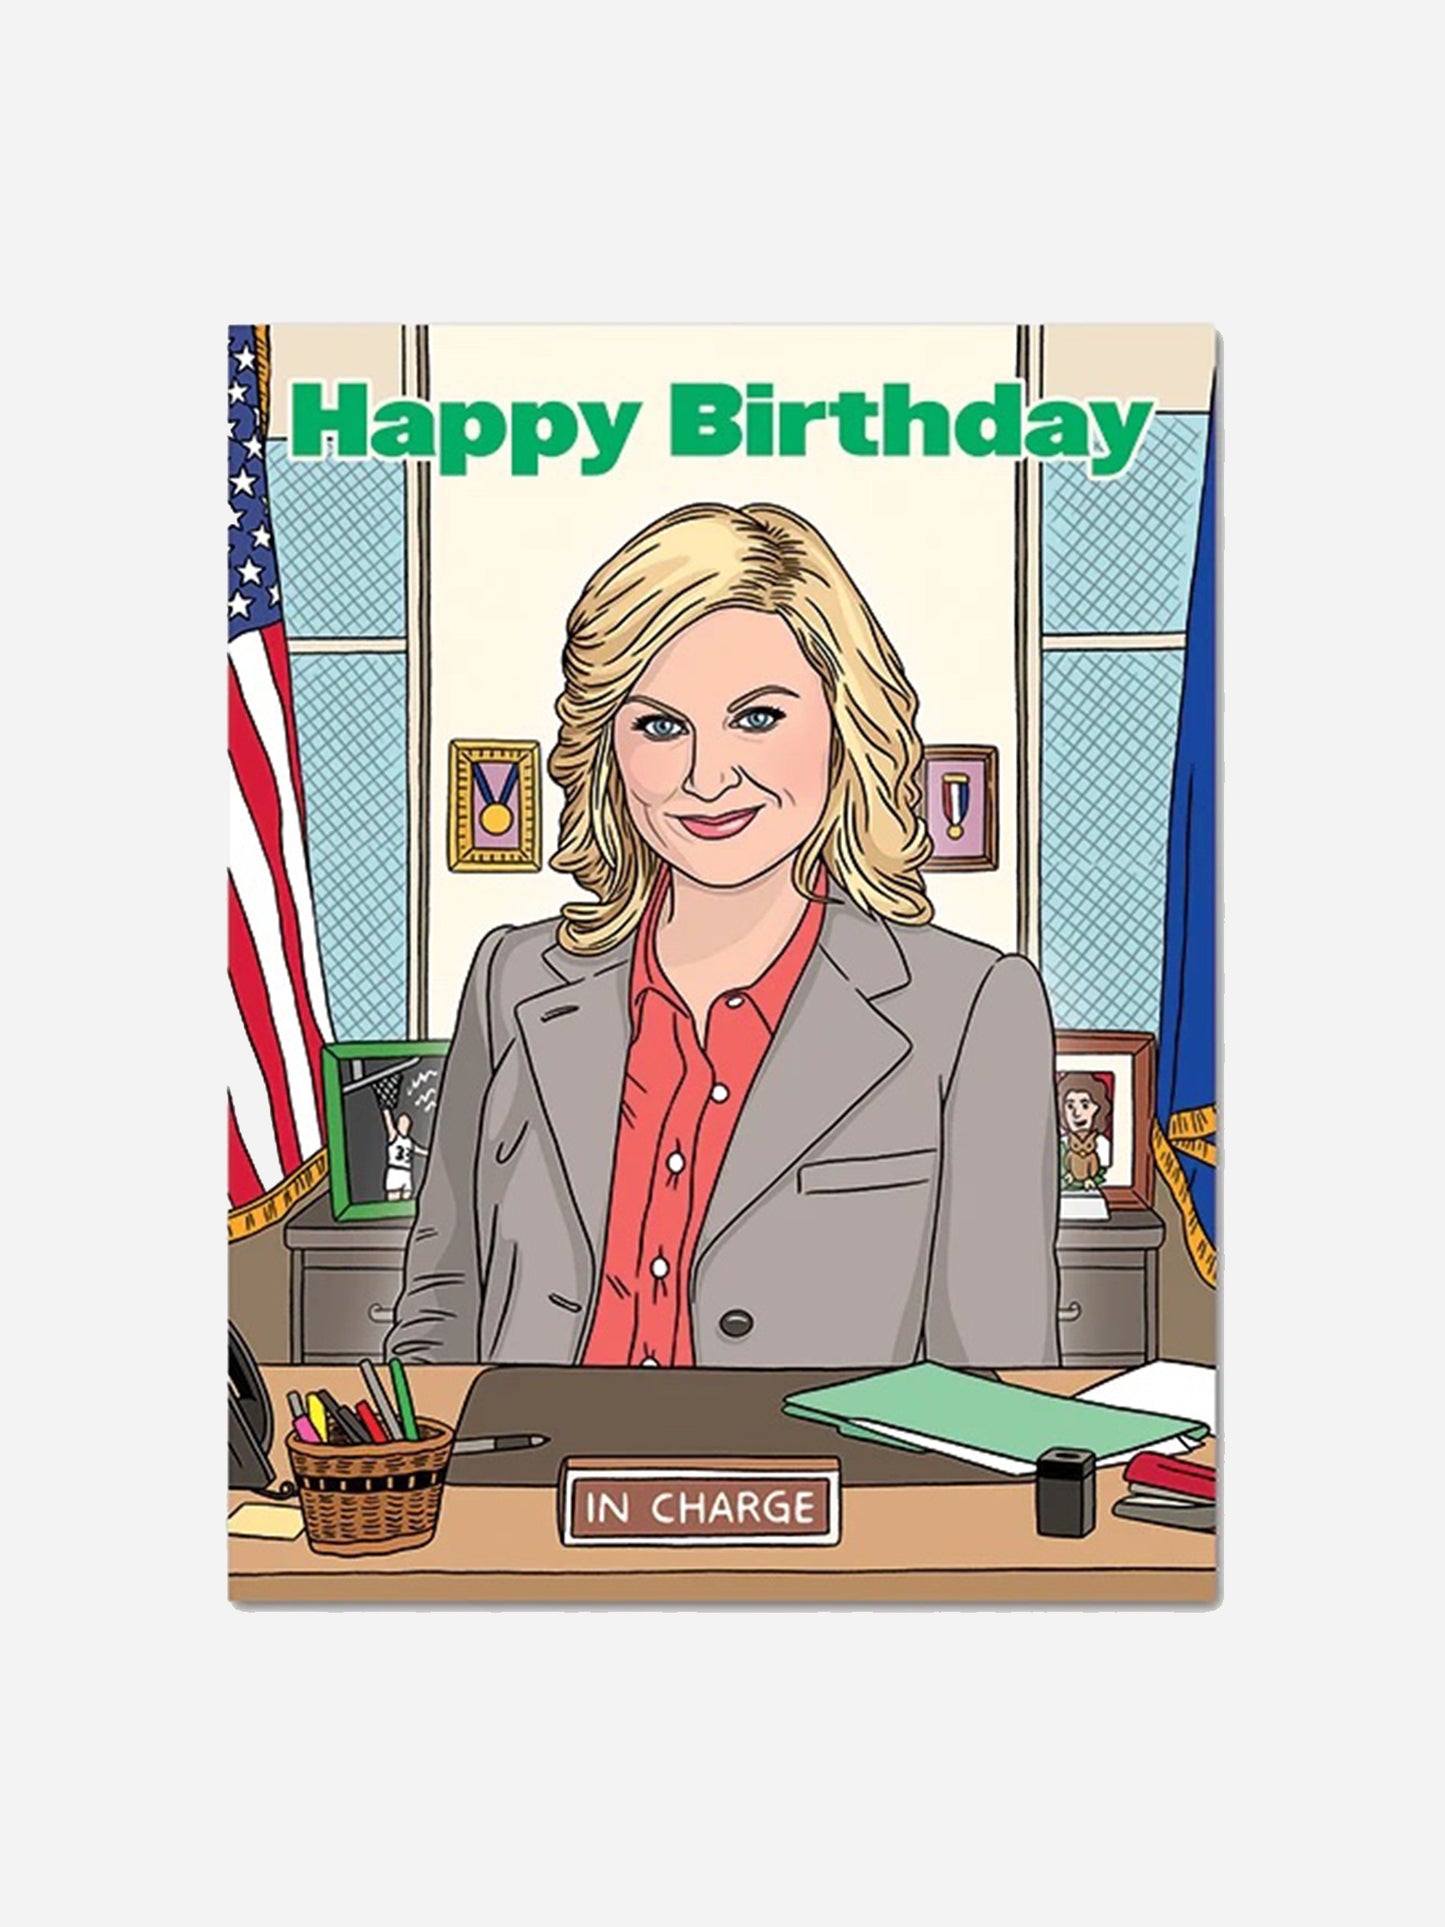 The Found Leslie Happy Birthday Card